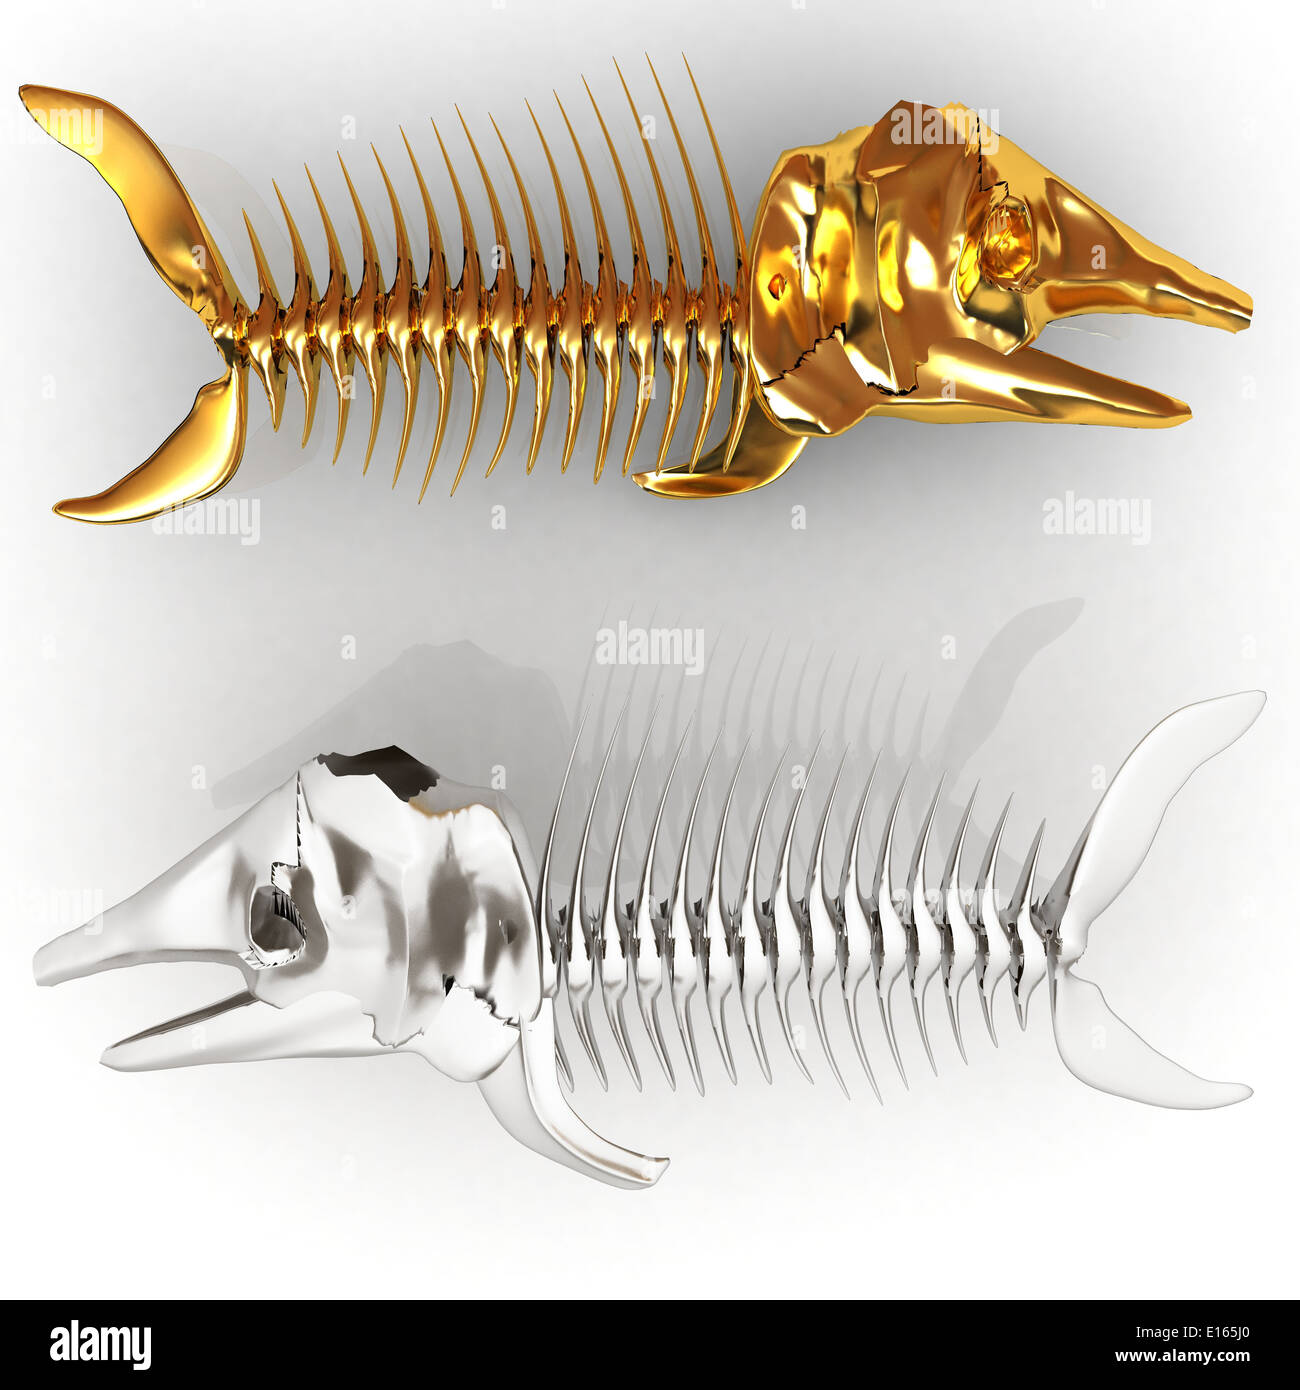 Fish Bone Structure Stock Photos & Fish Bone Structure Stock Images - Alamy